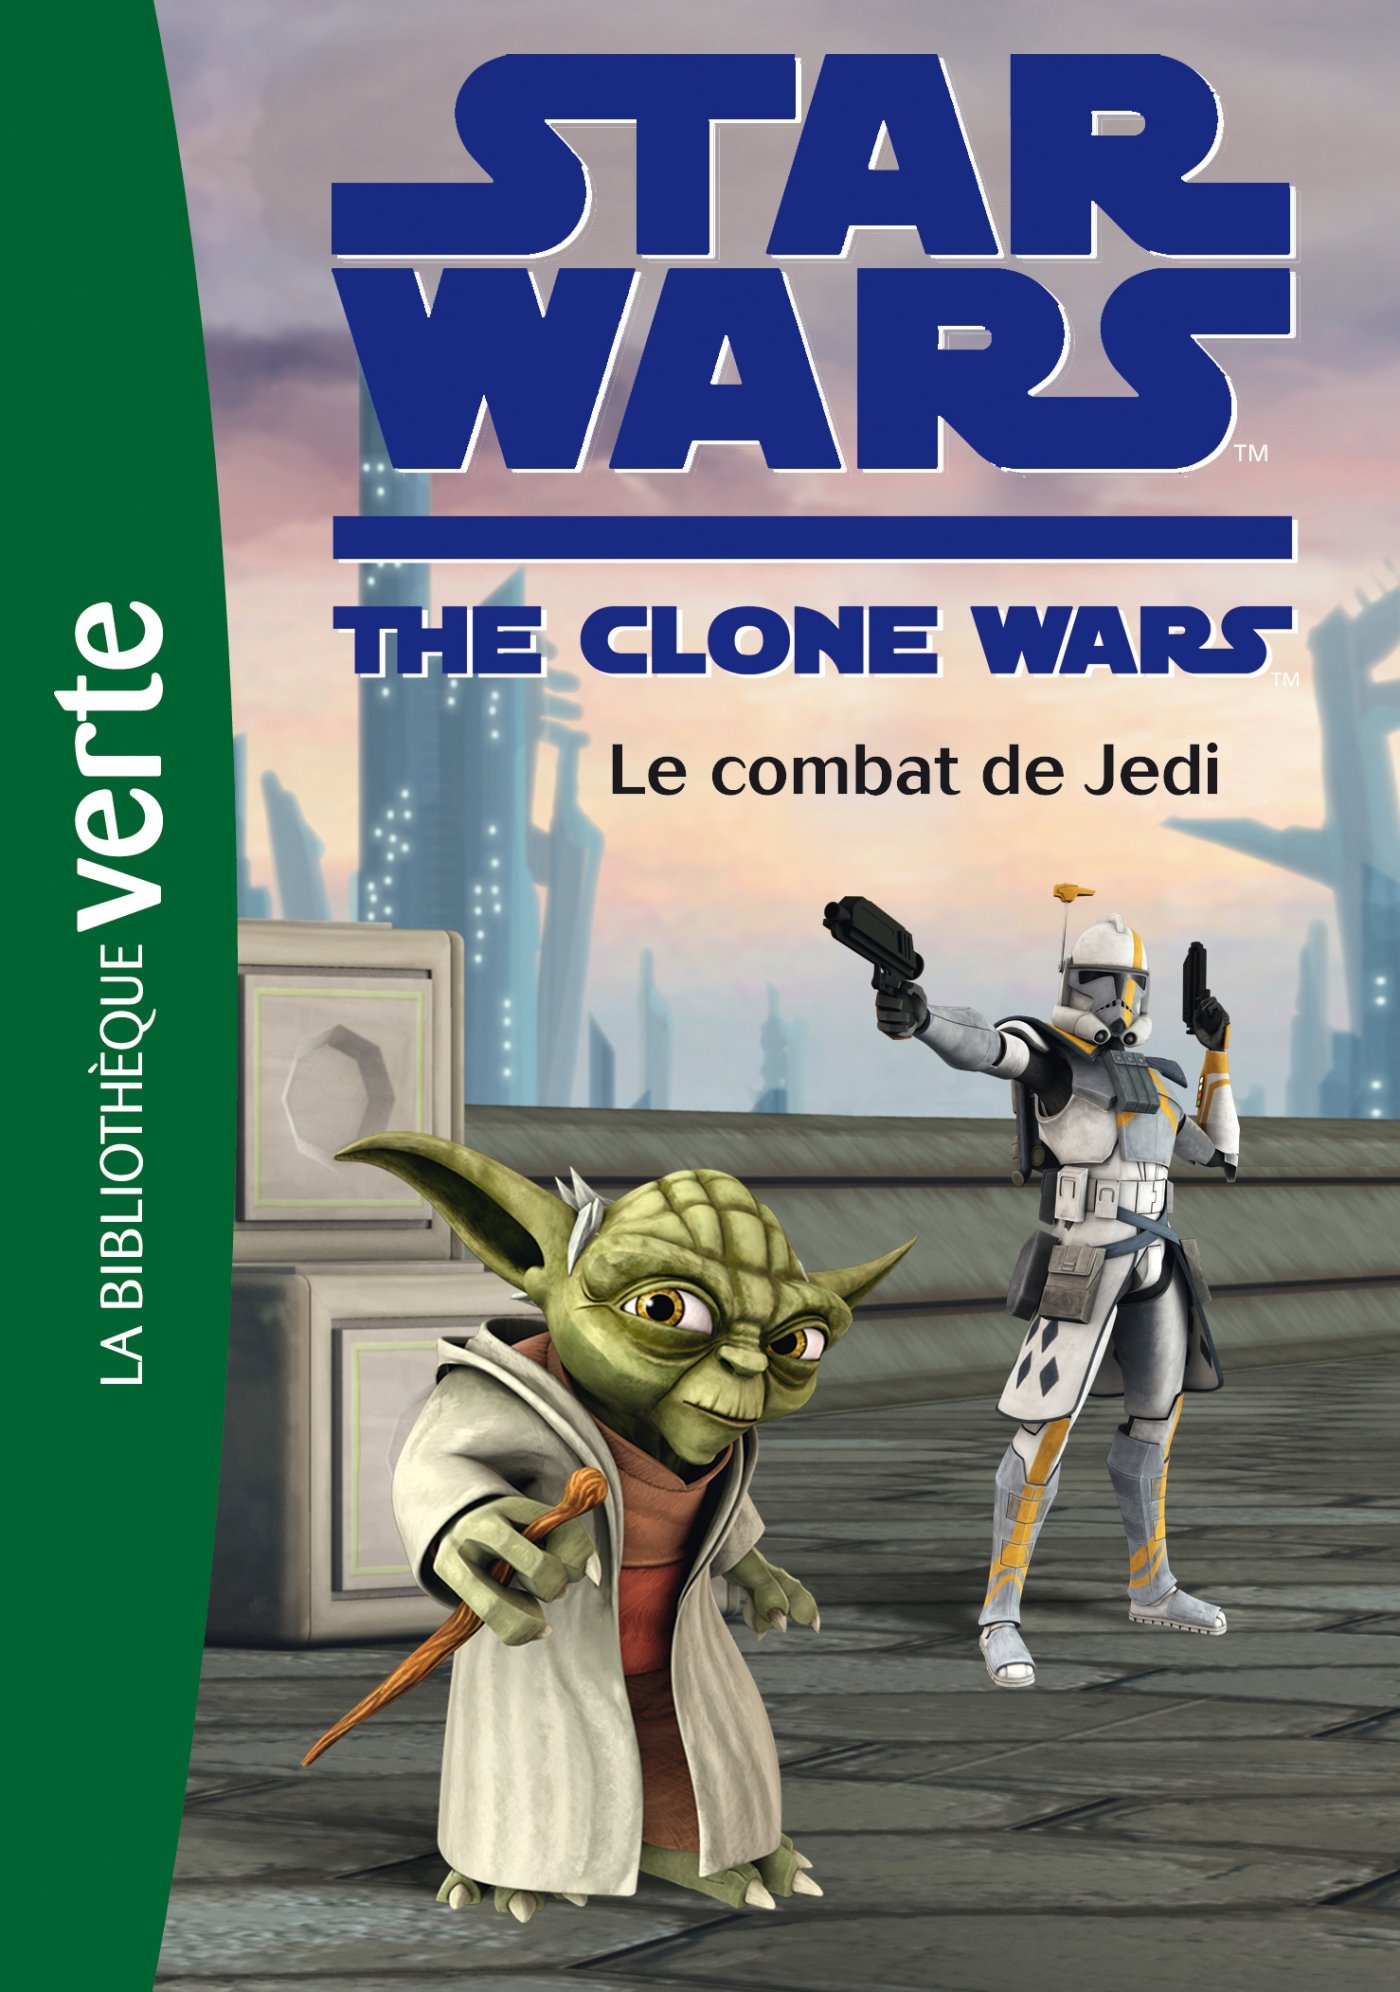 Le combat de Jedi, Star Wars Wiki